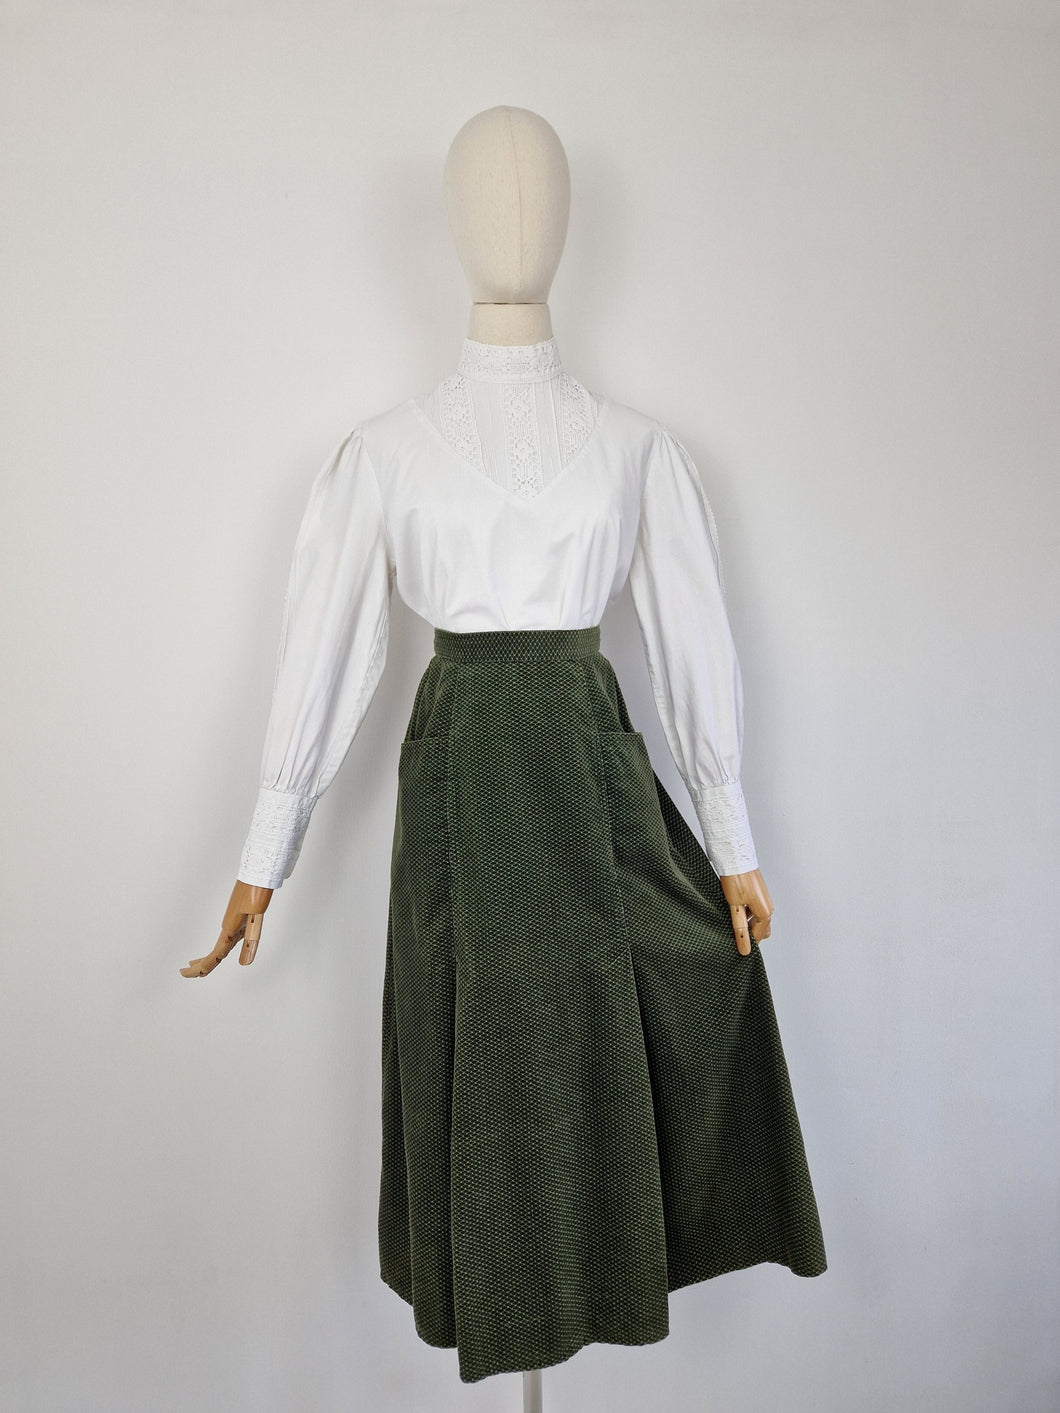 Vintage 70s Laura Ashley green corduroy skirt